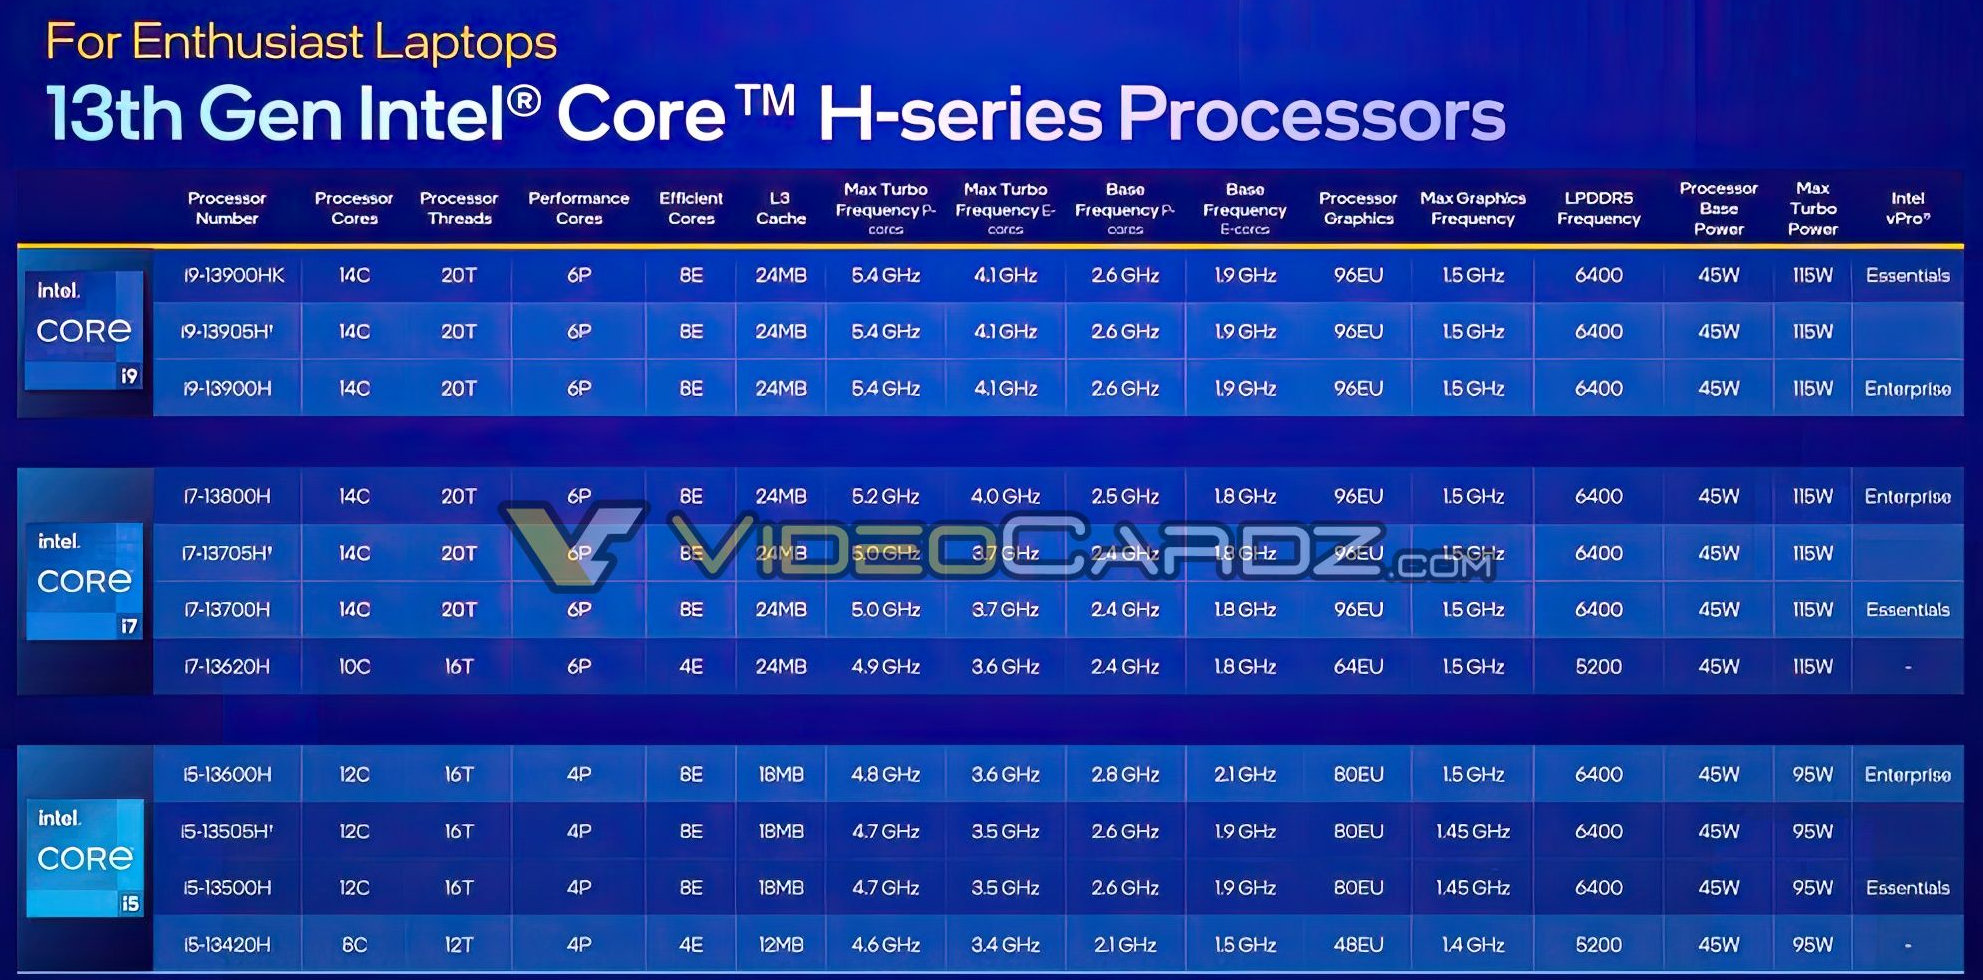 12th Gen Intel Core HX Processors Launch as World's Best Mobile